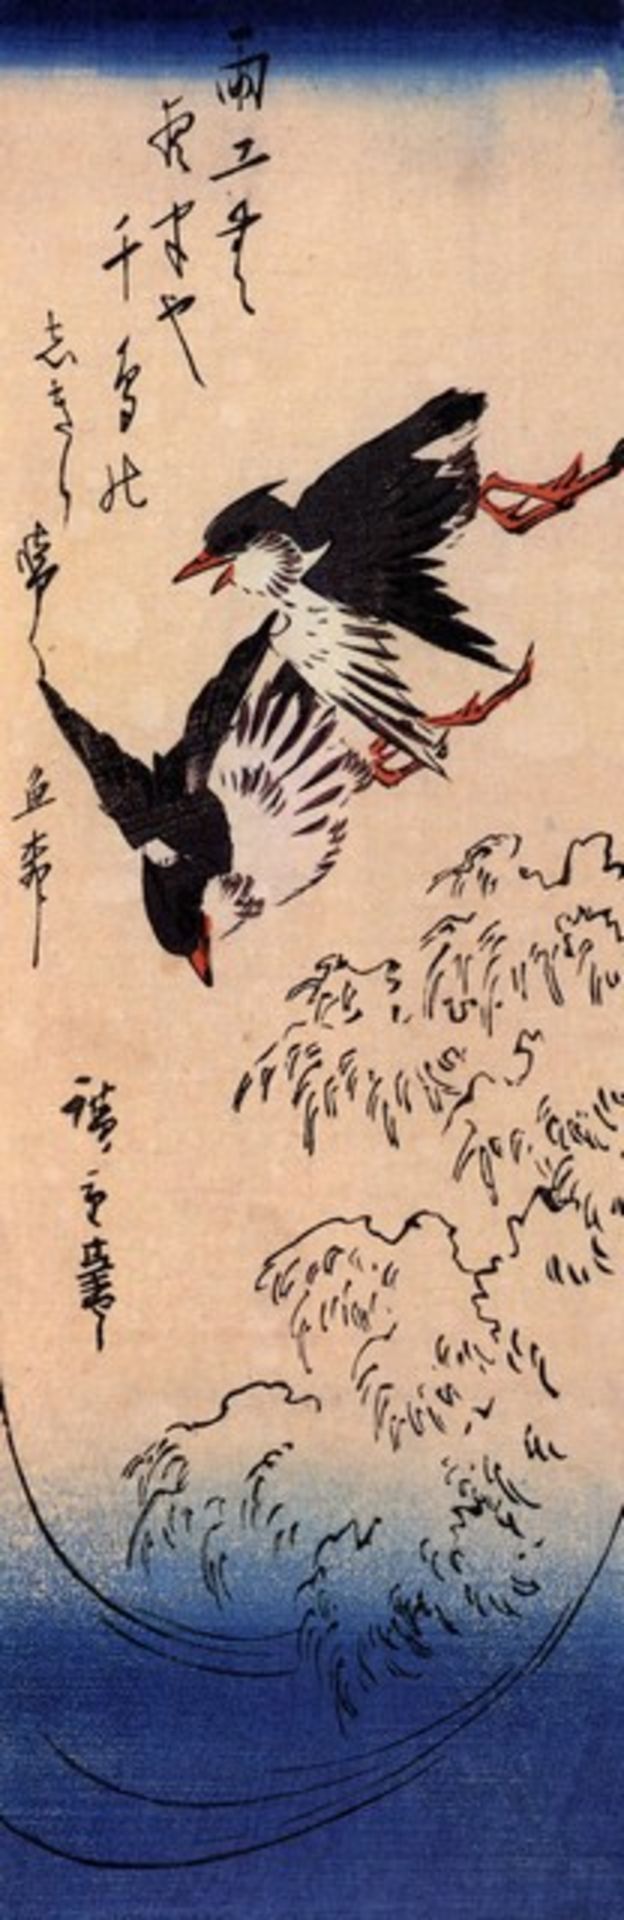 Hiroshige - Towboats Along the Yotsugi - Image 2 of 3